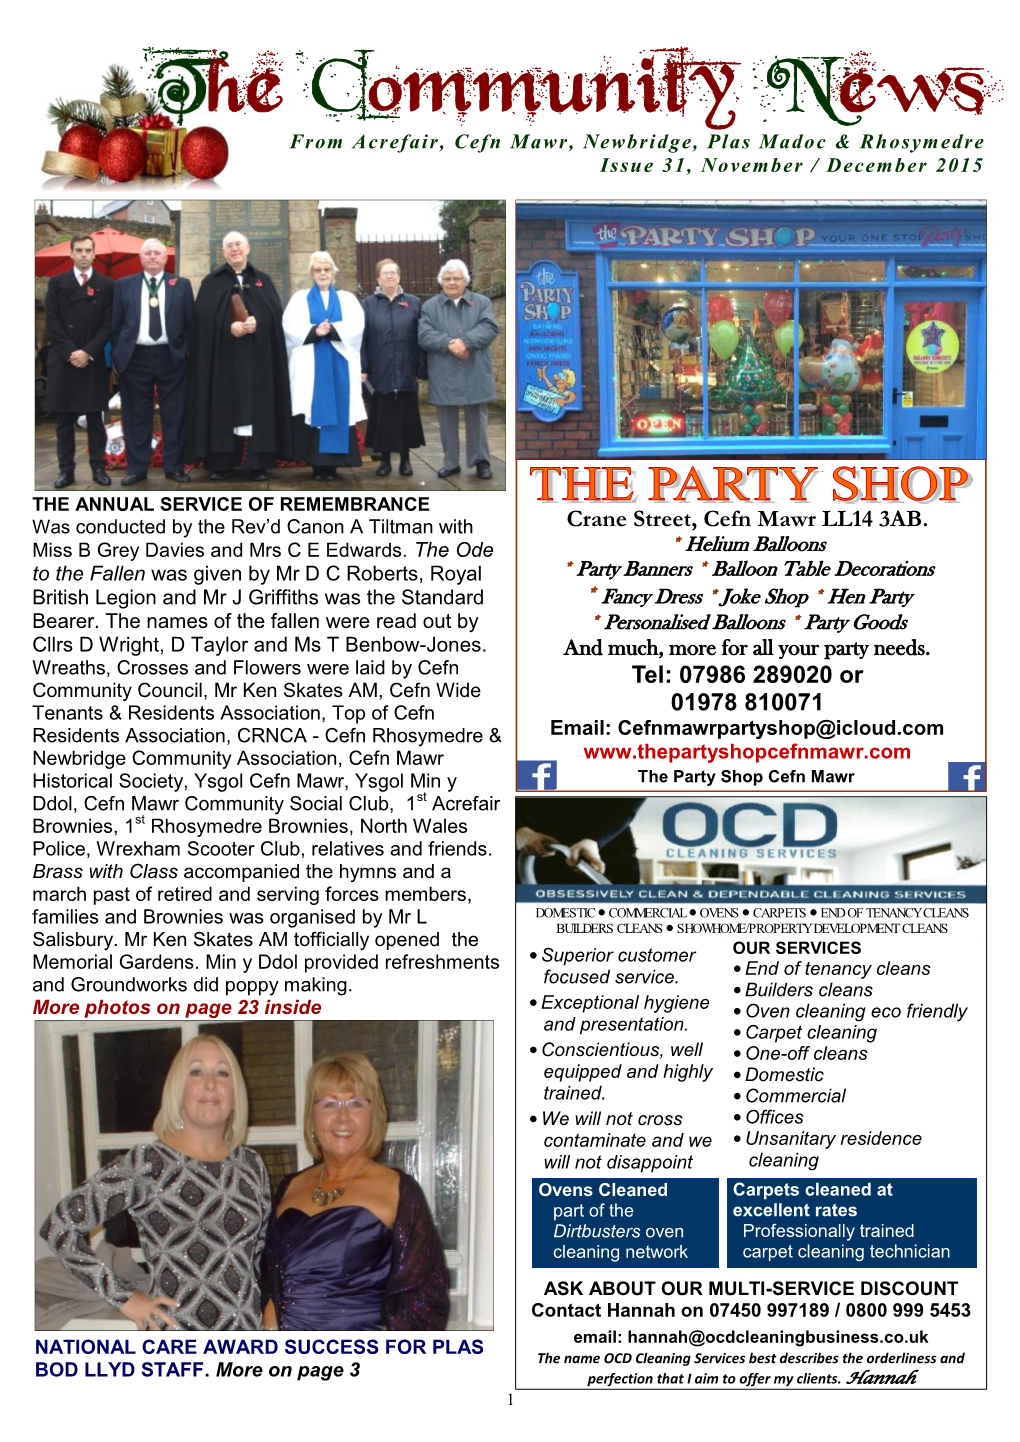 The Community News from Acrefair, Cefn Mawr, Newbridge, Plas Madoc & Rhosymedre Issue 31, November / December 2015